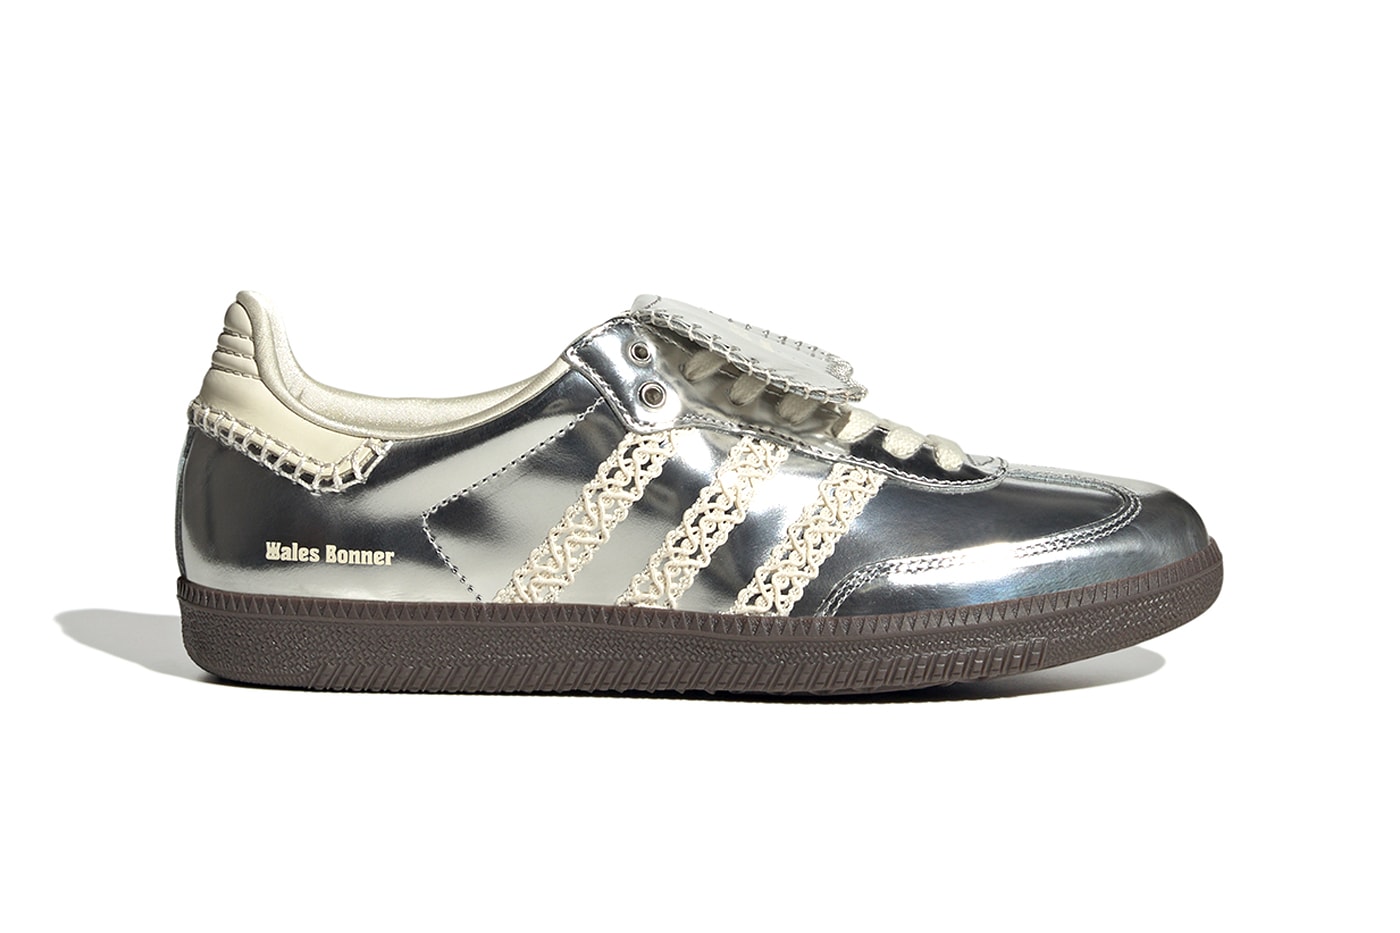 wales bonner adidas footwear sneakers silver laces